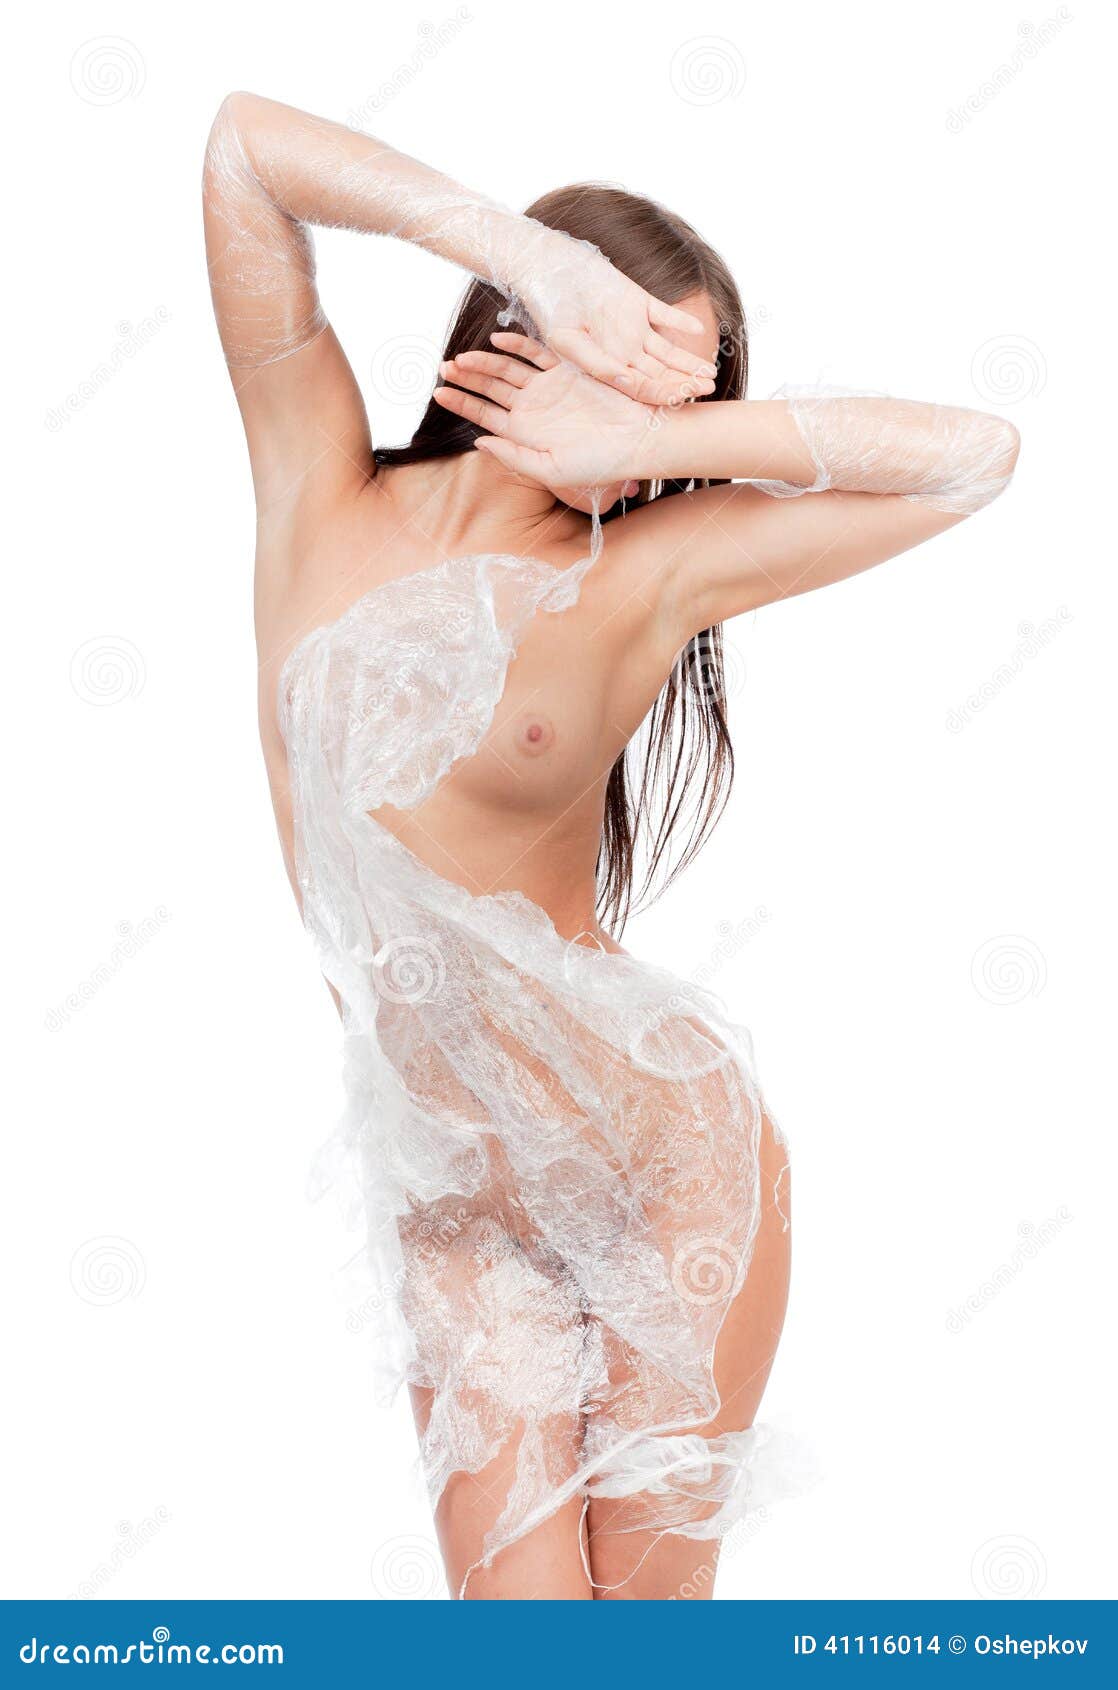 plastic nude wrap girl